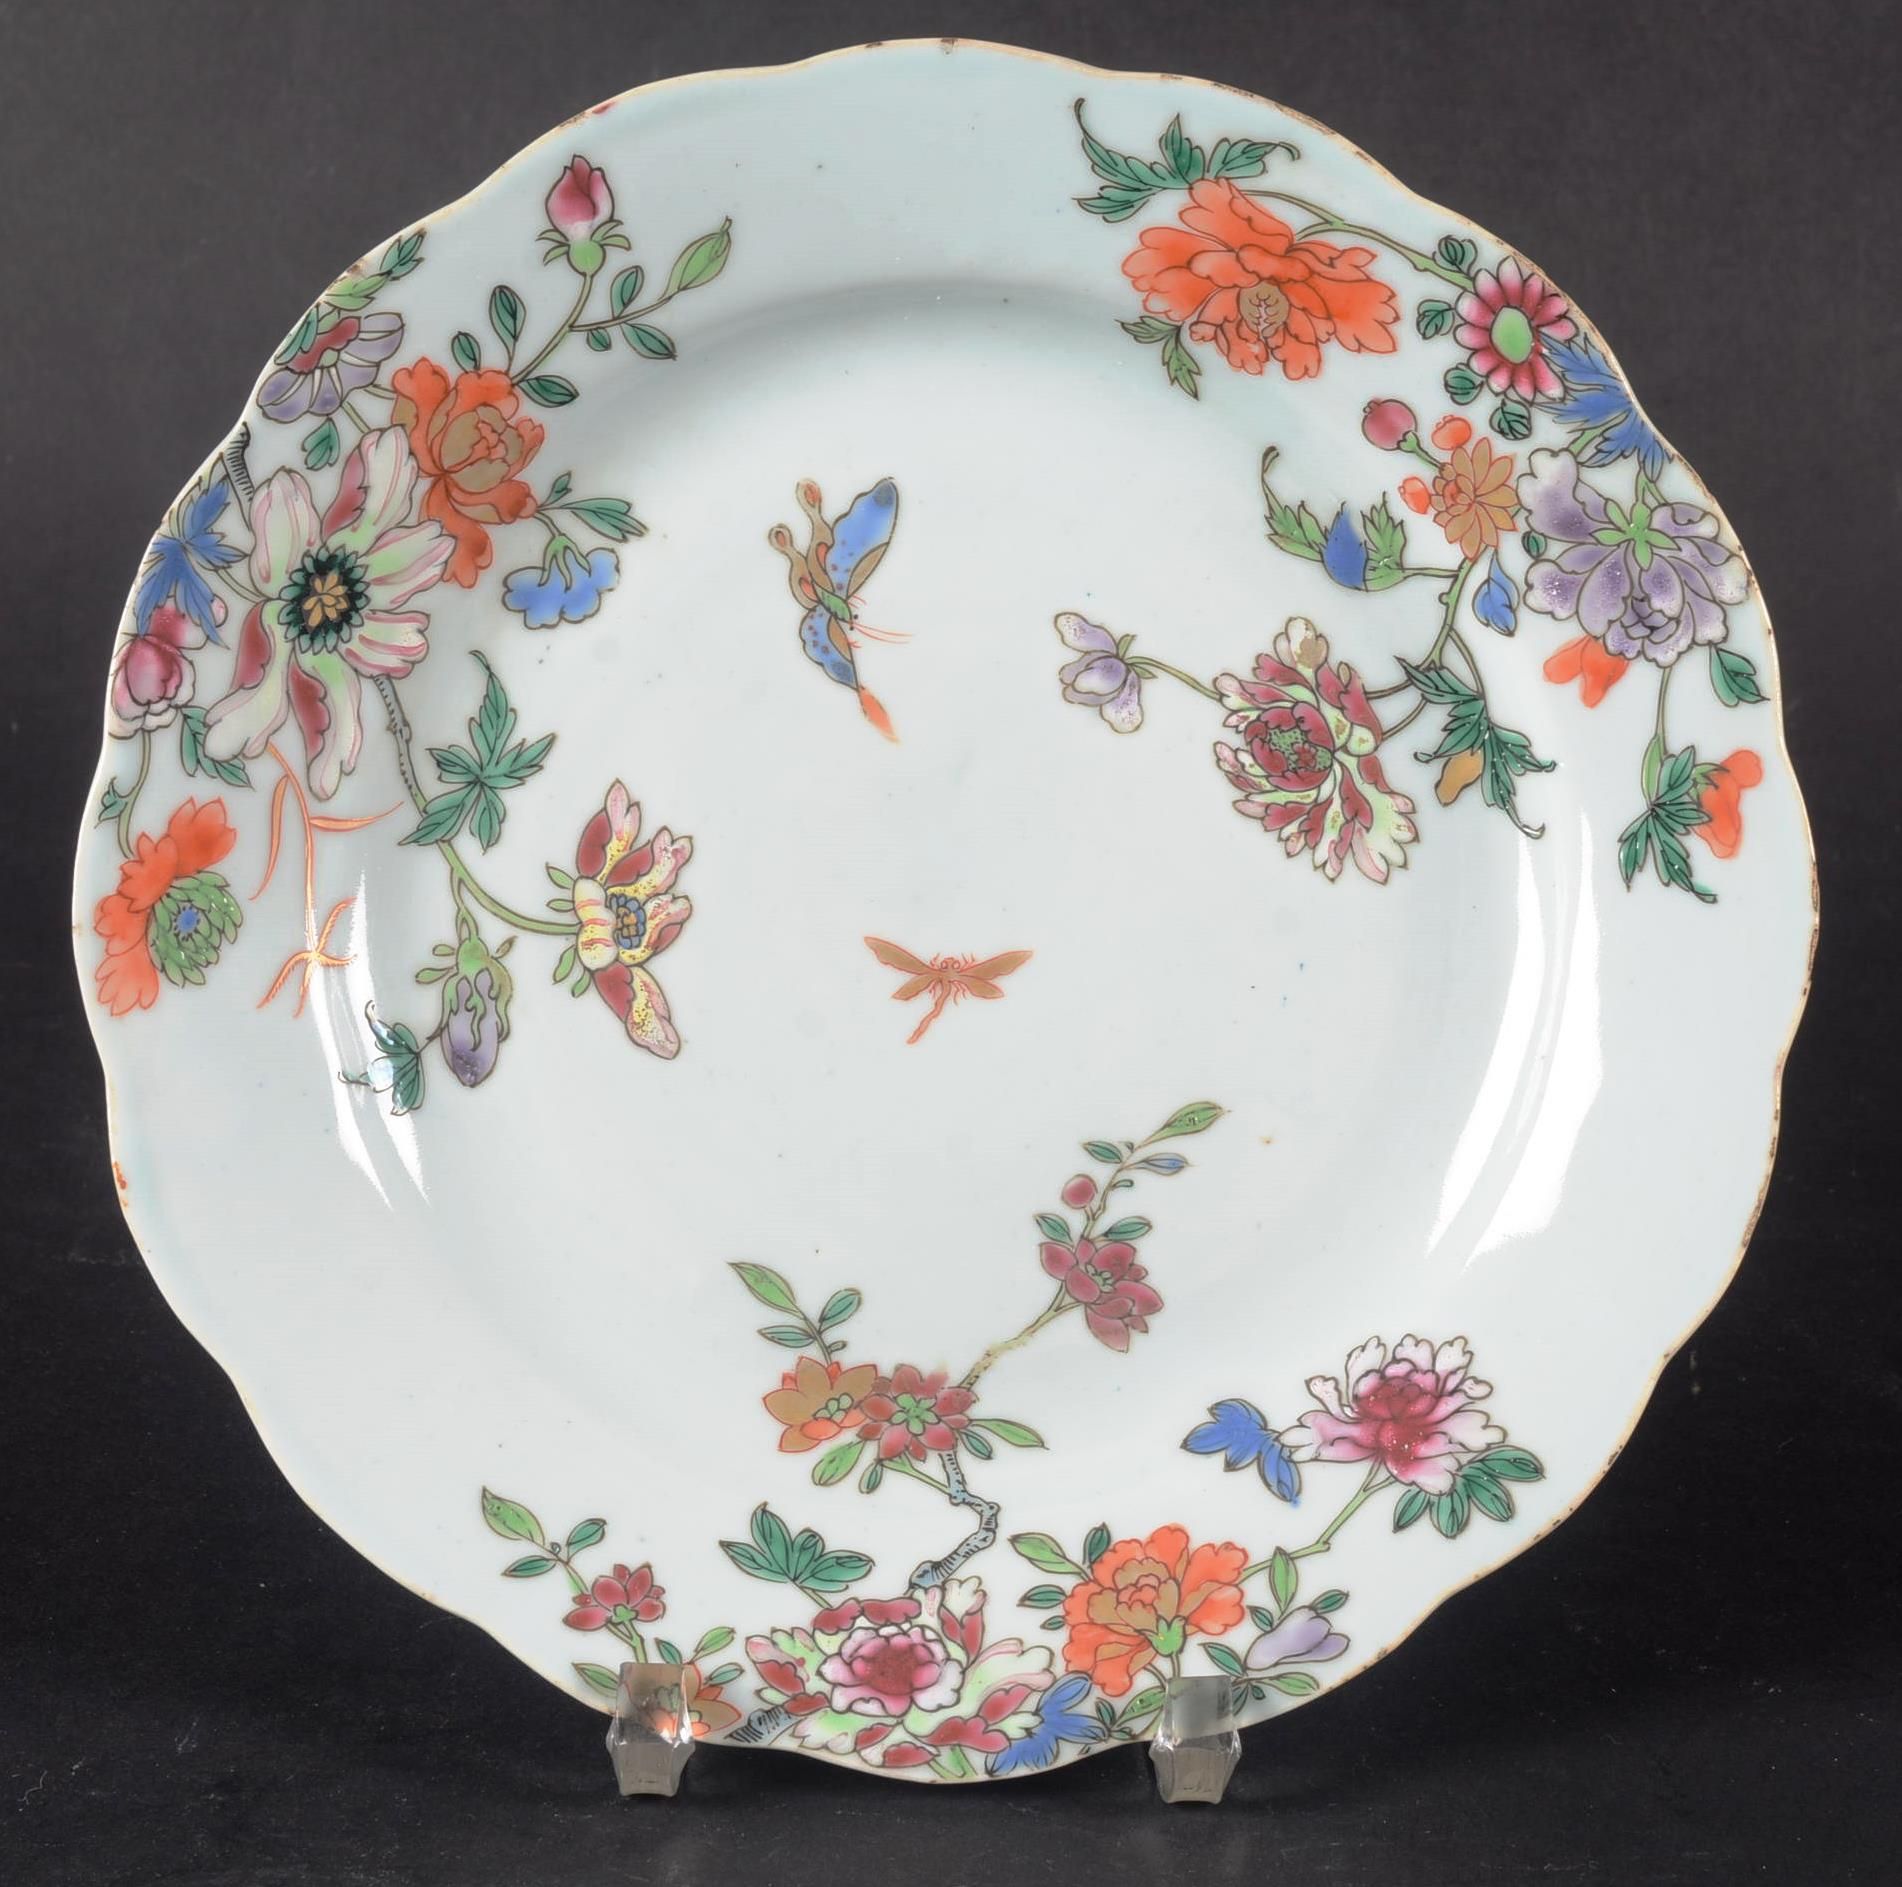 CHINE, Assiette circulaire chantournée 中国。

中国瓷器圆盘，装饰有多色的花枝和昆虫。中国，18世纪。

直径：23厘米